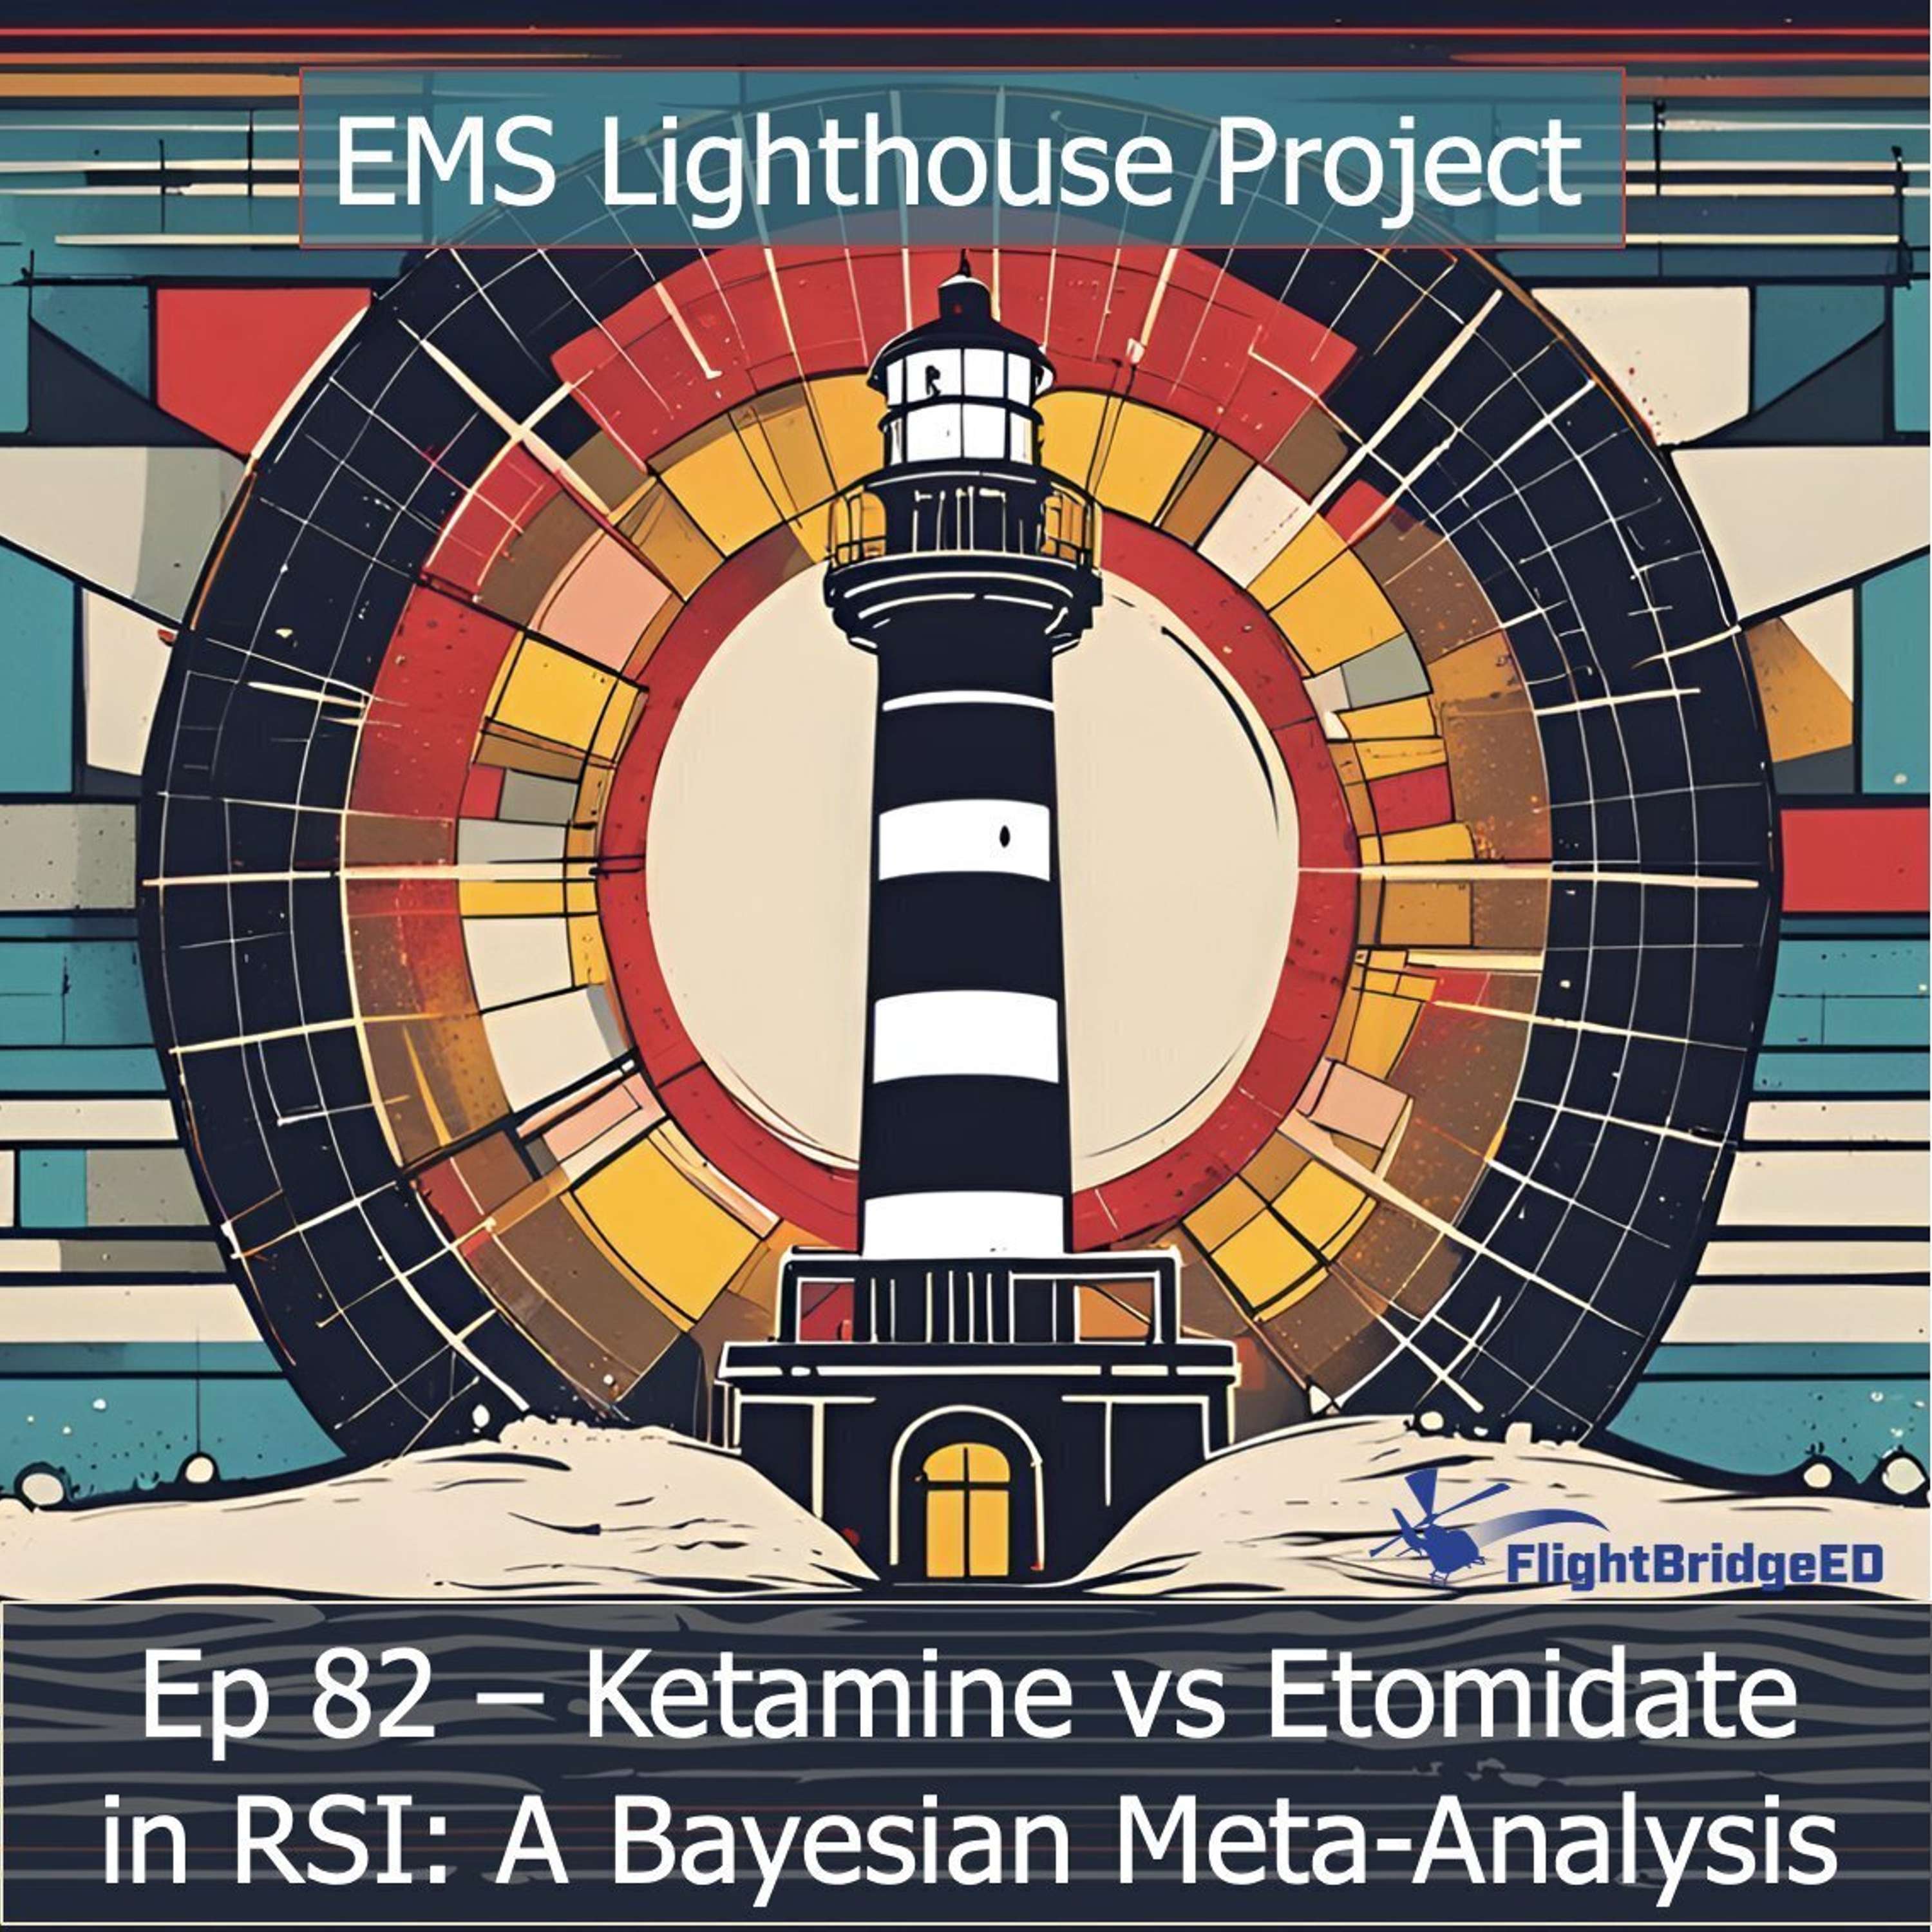 Ketamine v Etomidate for RSI: A Bayesian Meta-Analysis